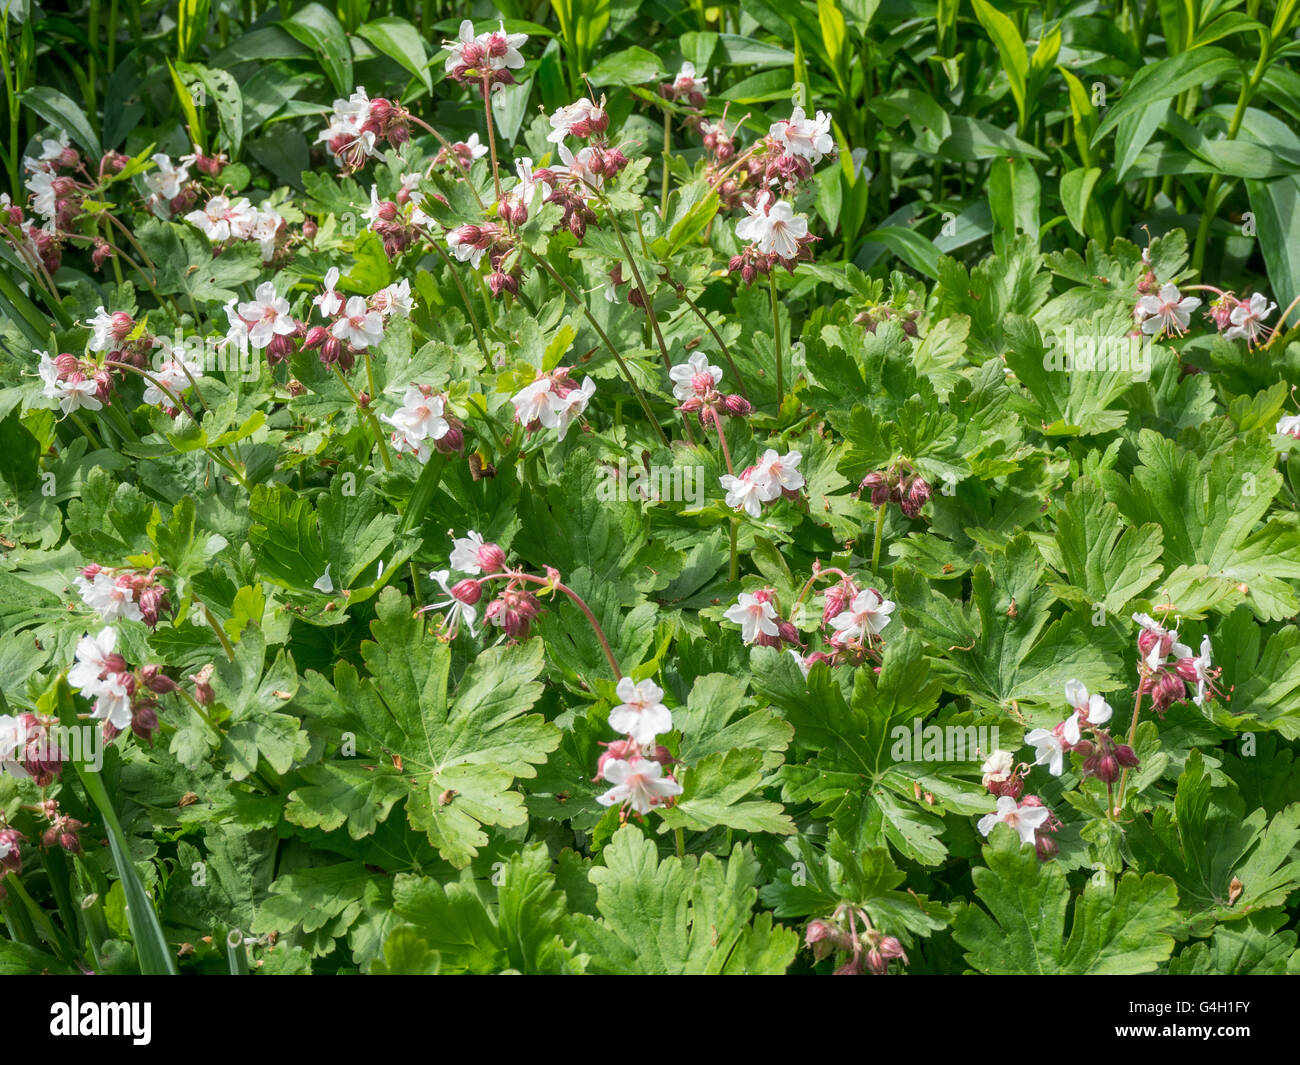 Geranium macrorhizum album flowers and foliage Stock Photo